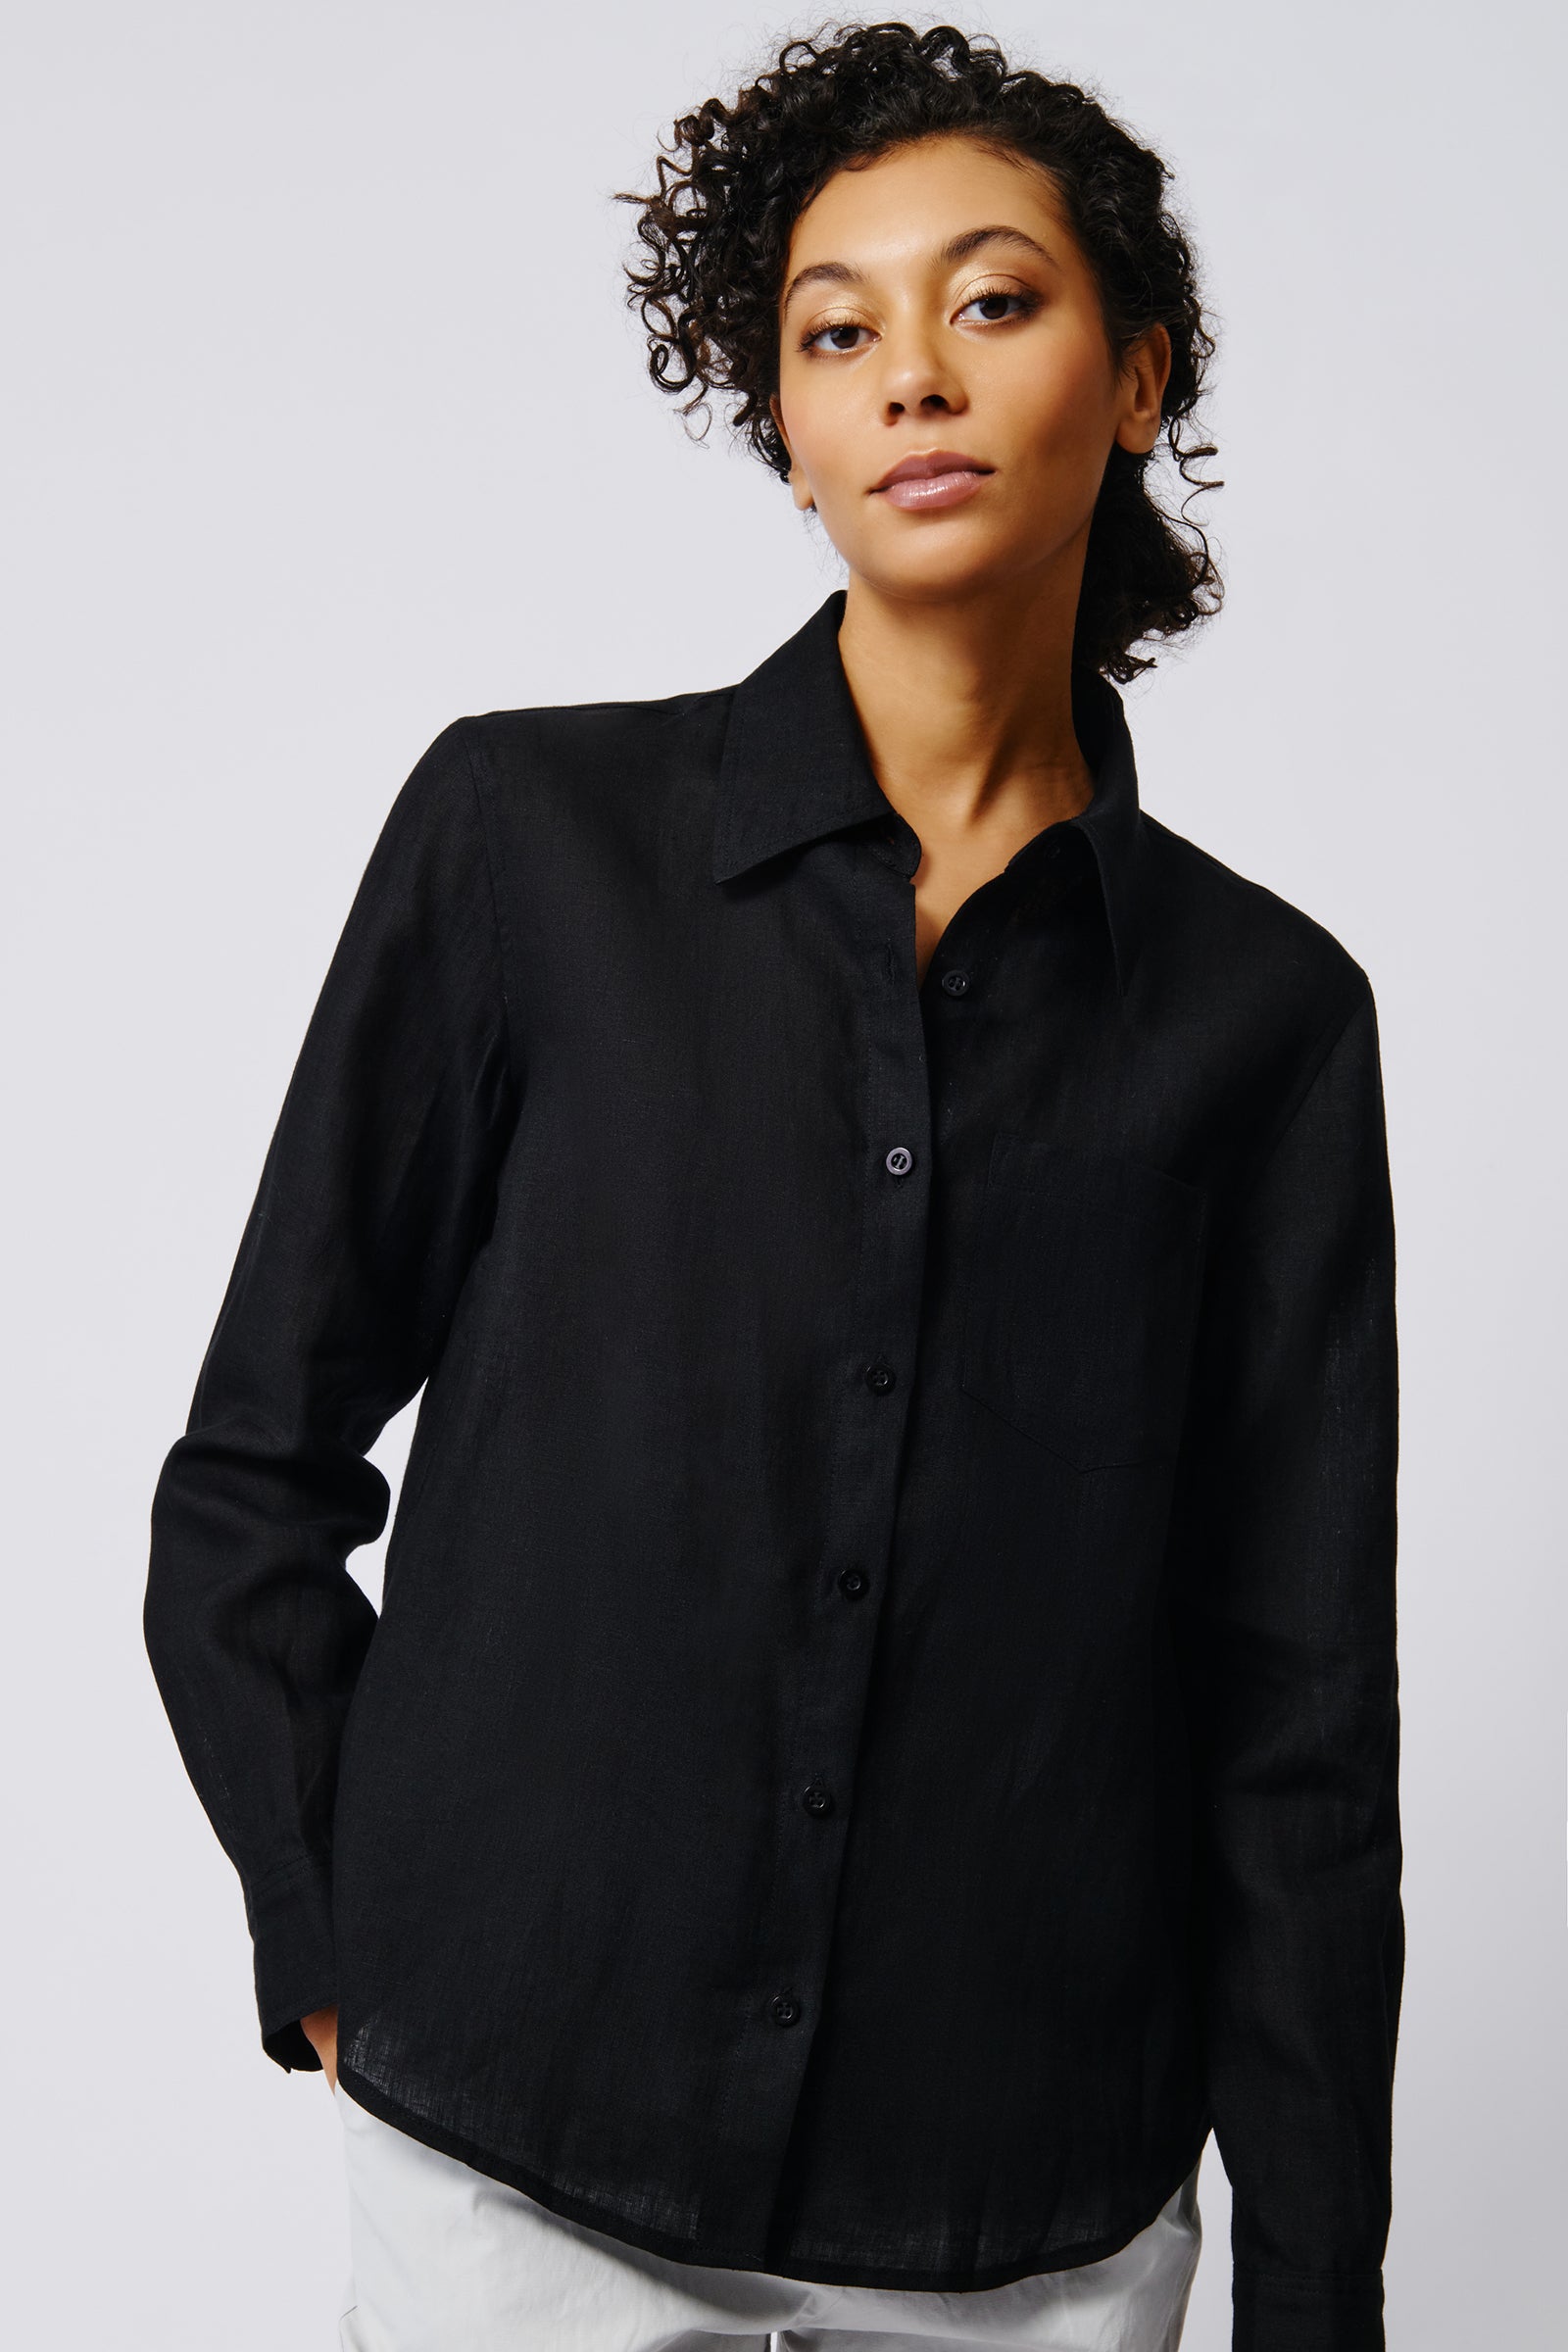 Kal Rieman Summer Shirt in Black on Model Front View Crop 2